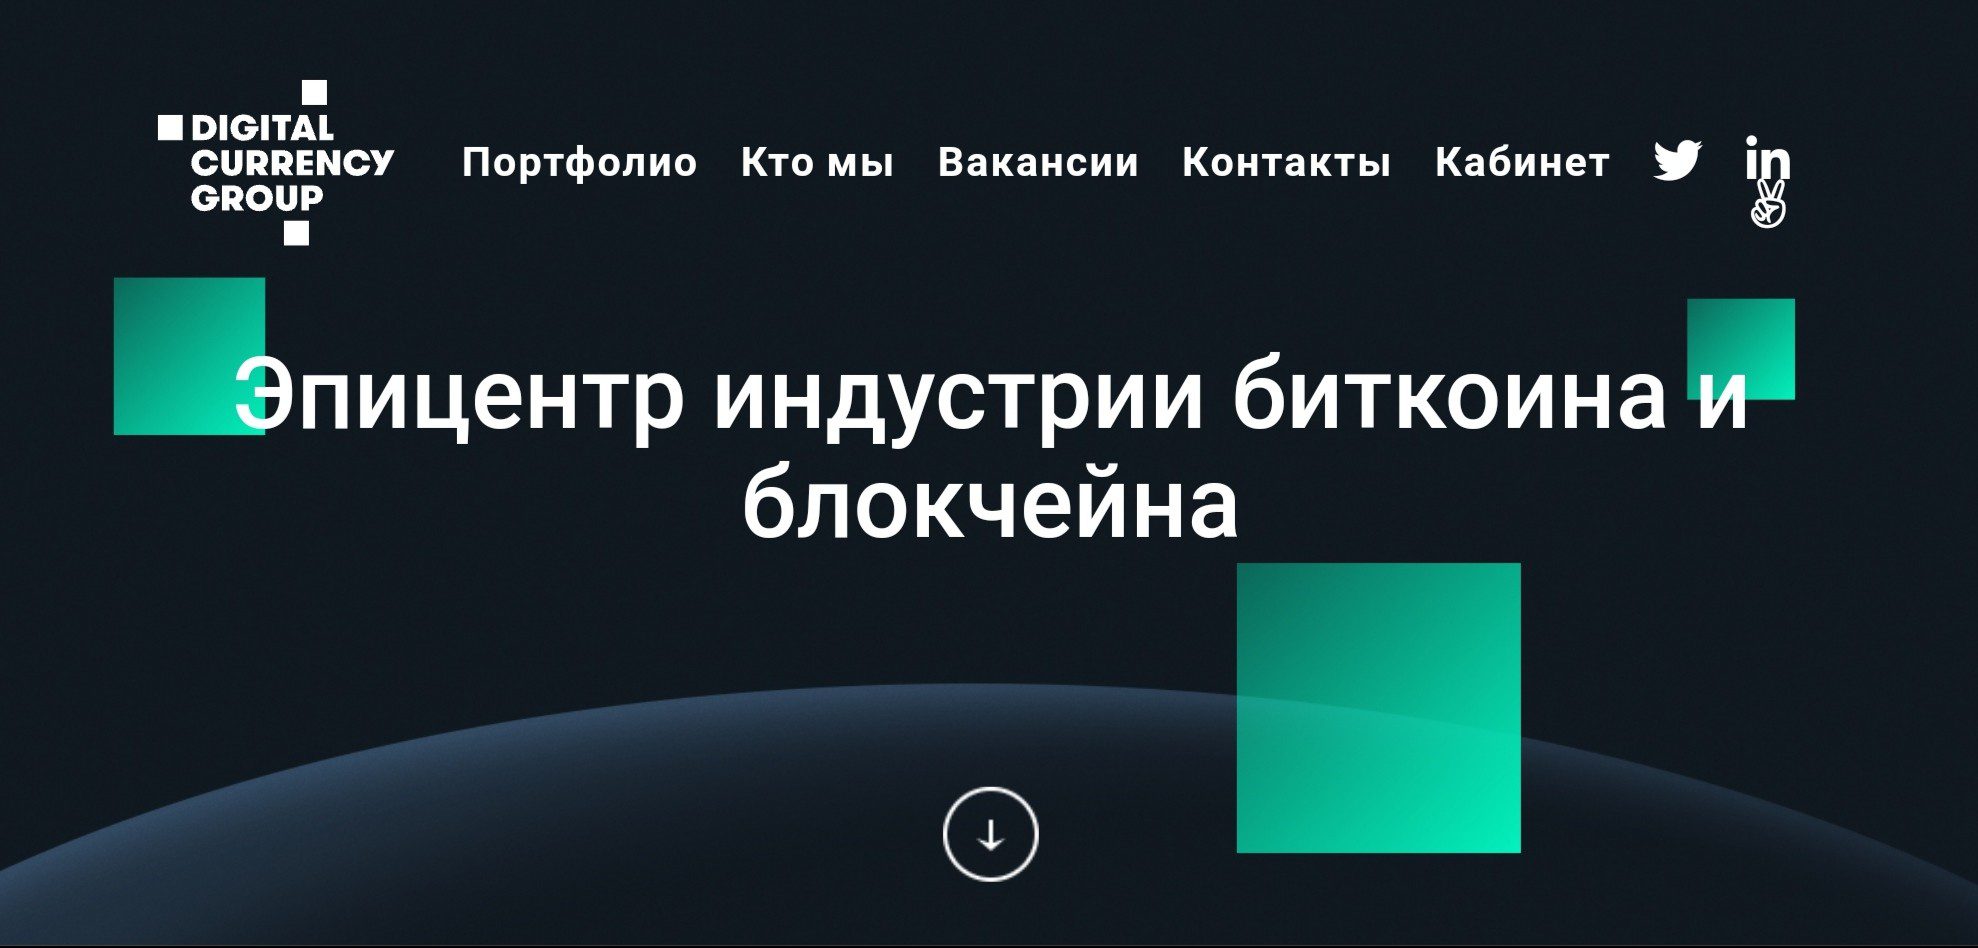 официальный сайт digital currency group